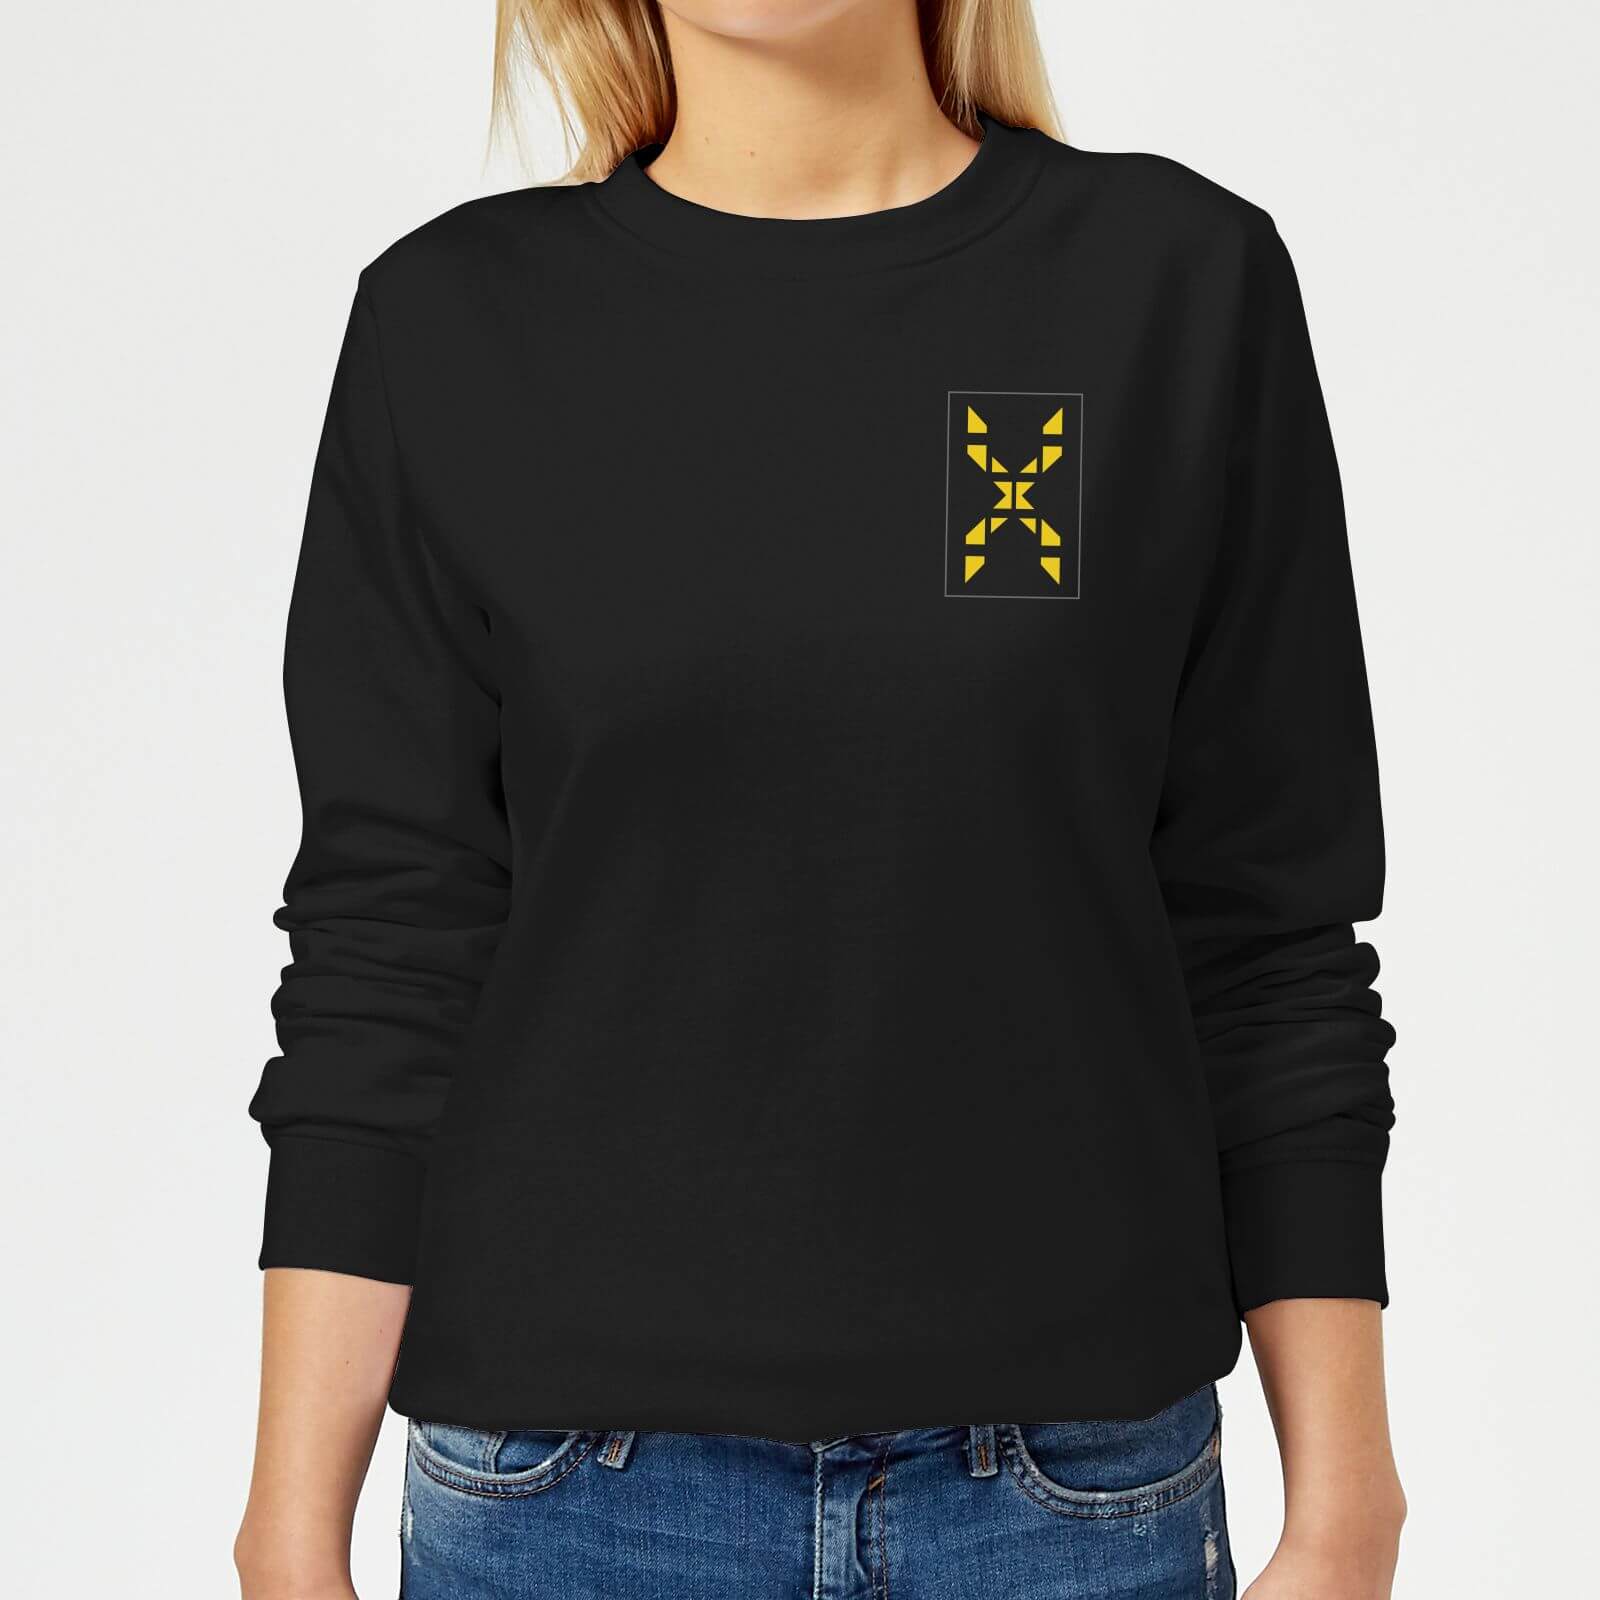 Family Fortunes Wrong Answer Pocket Print Women's Sweatshirt - Black - XS - Black